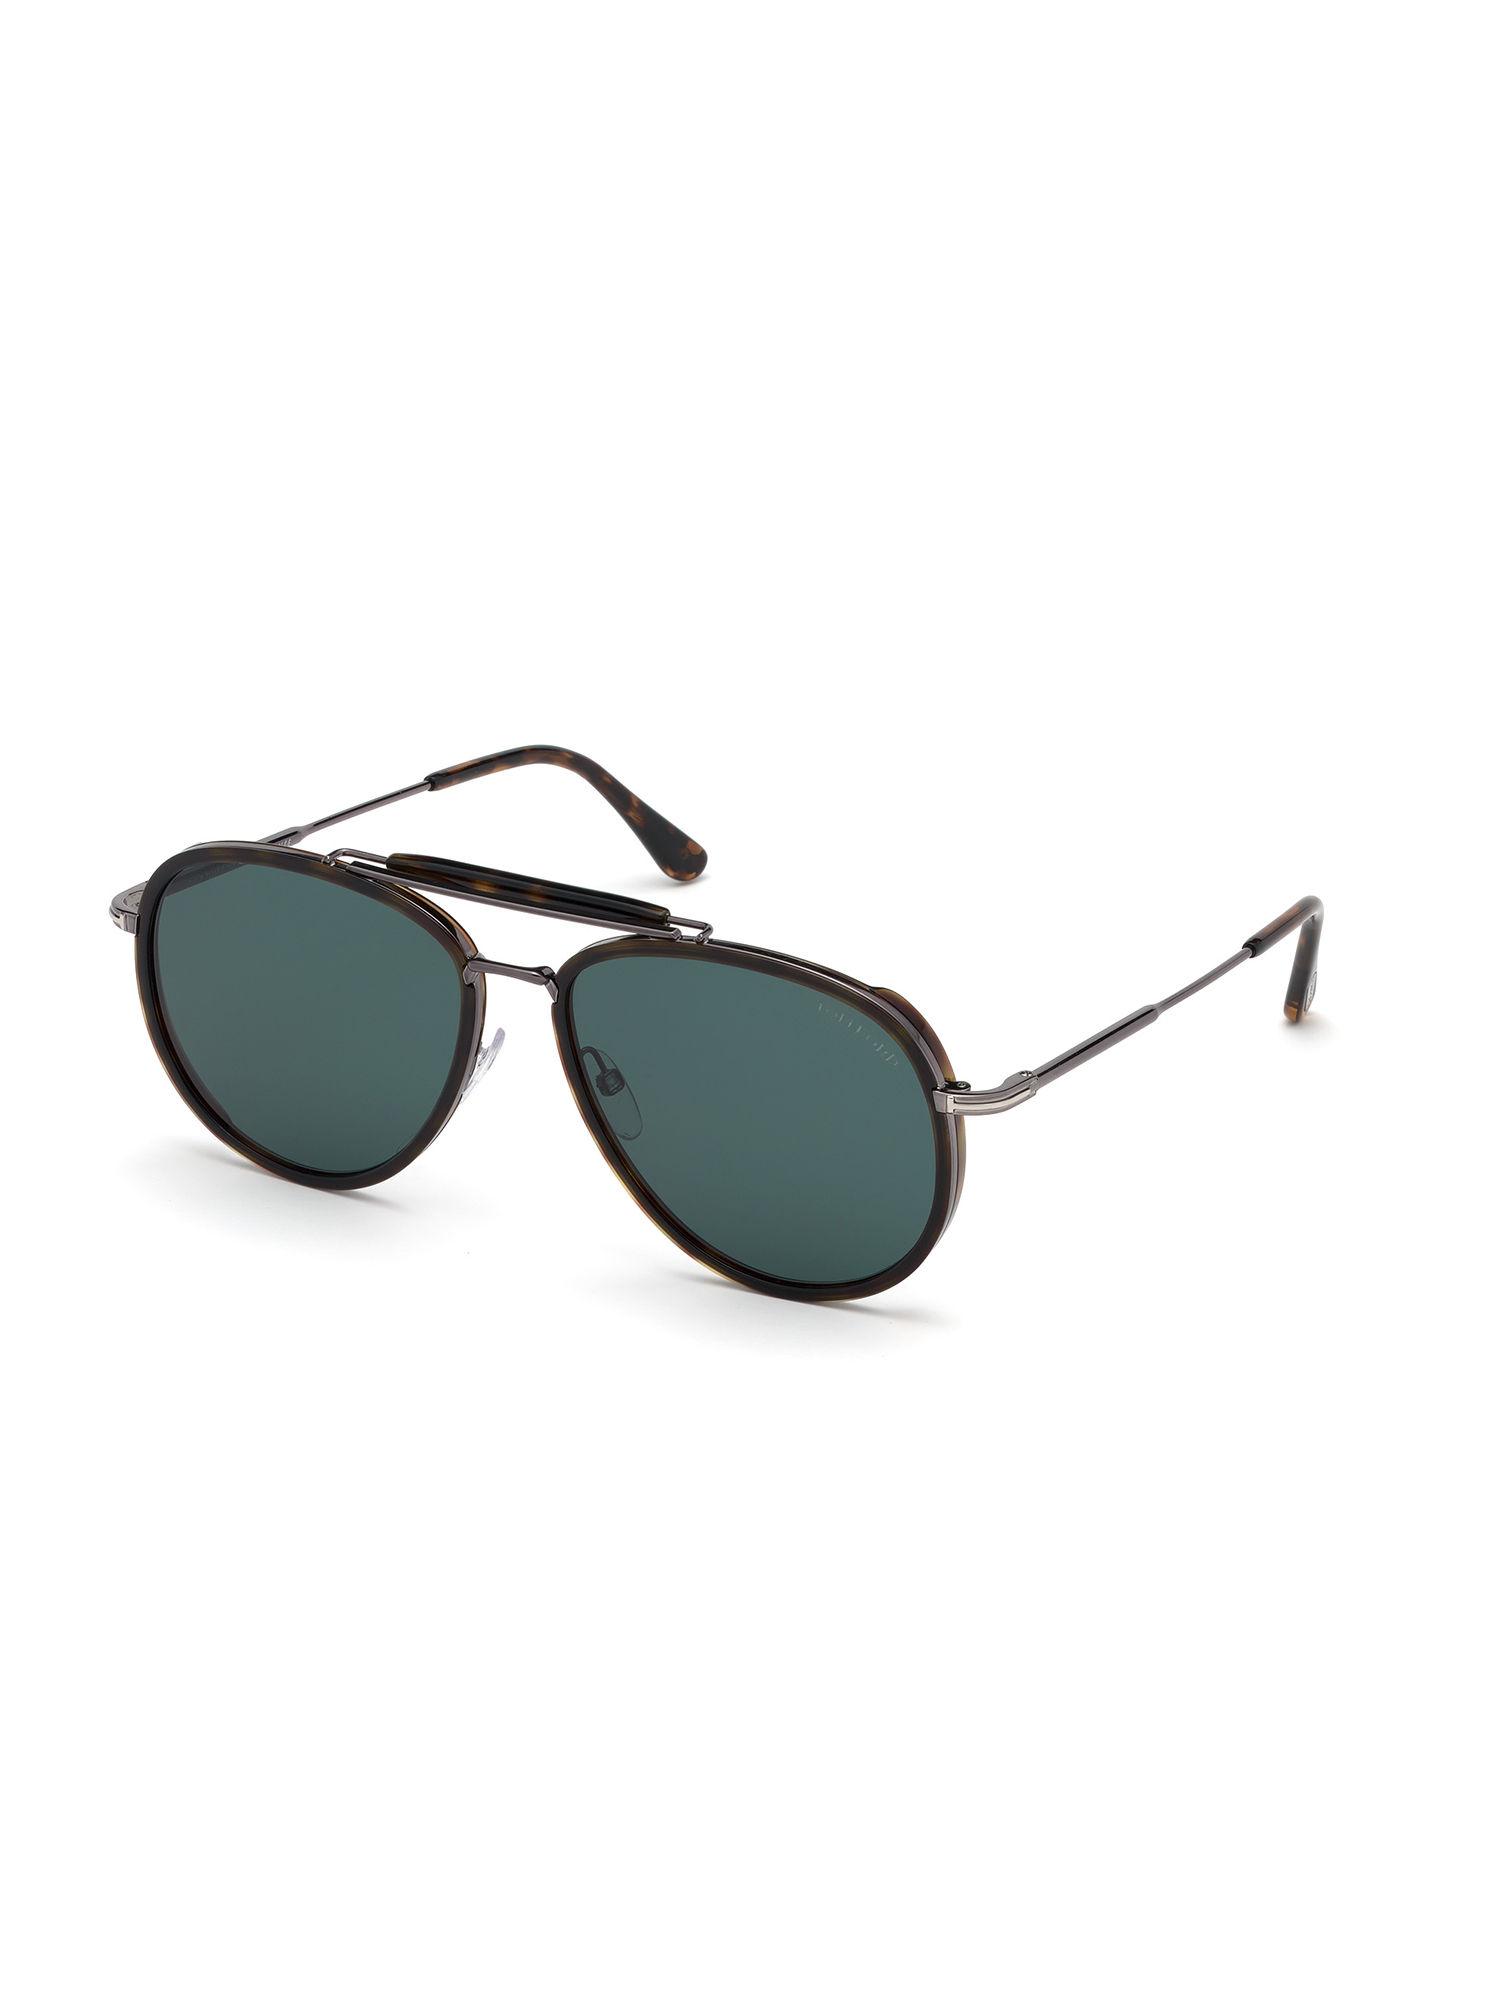 Brown Aviator Sunglasses - FT0666 60 52N